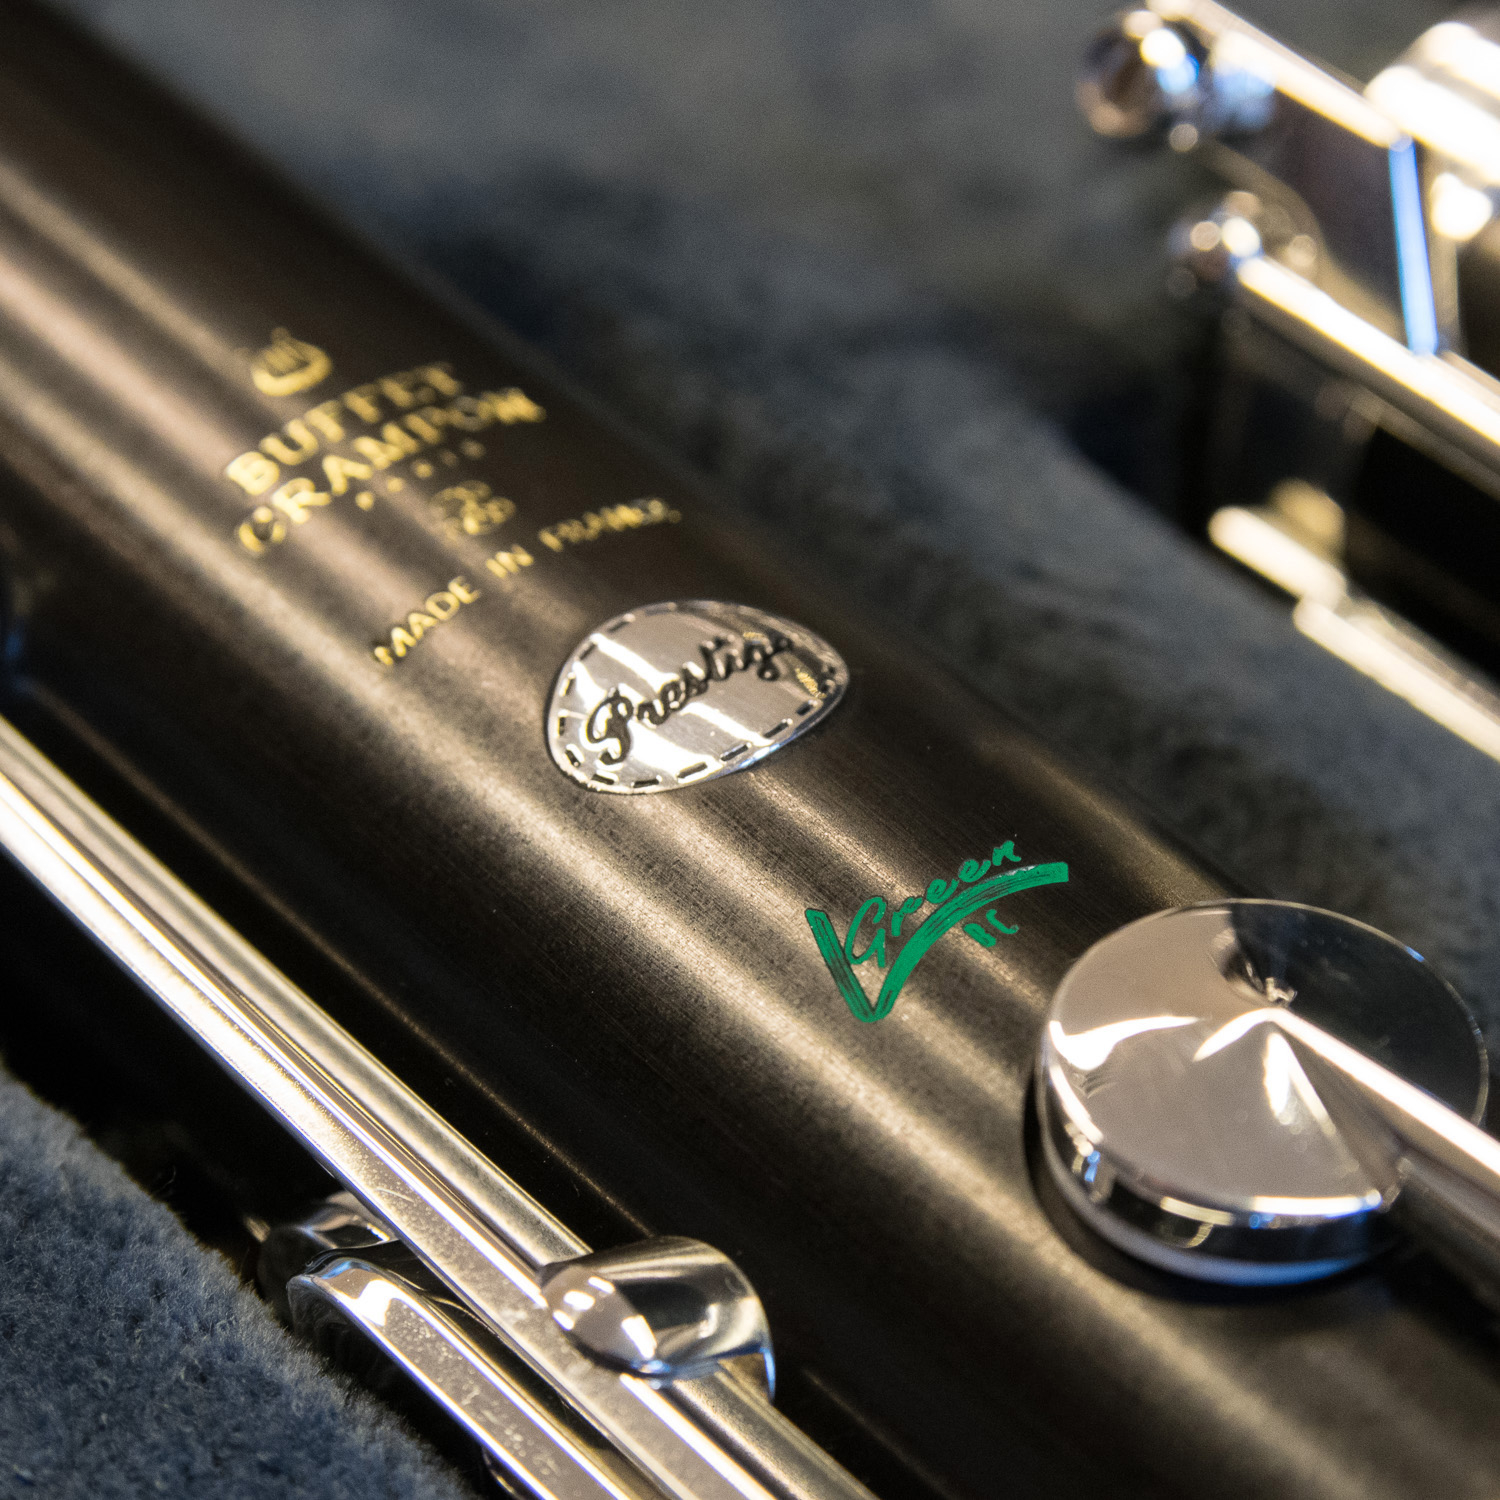 Buffet Crampon Bass Clarinet - 1193 Prestige Green LinE to low C